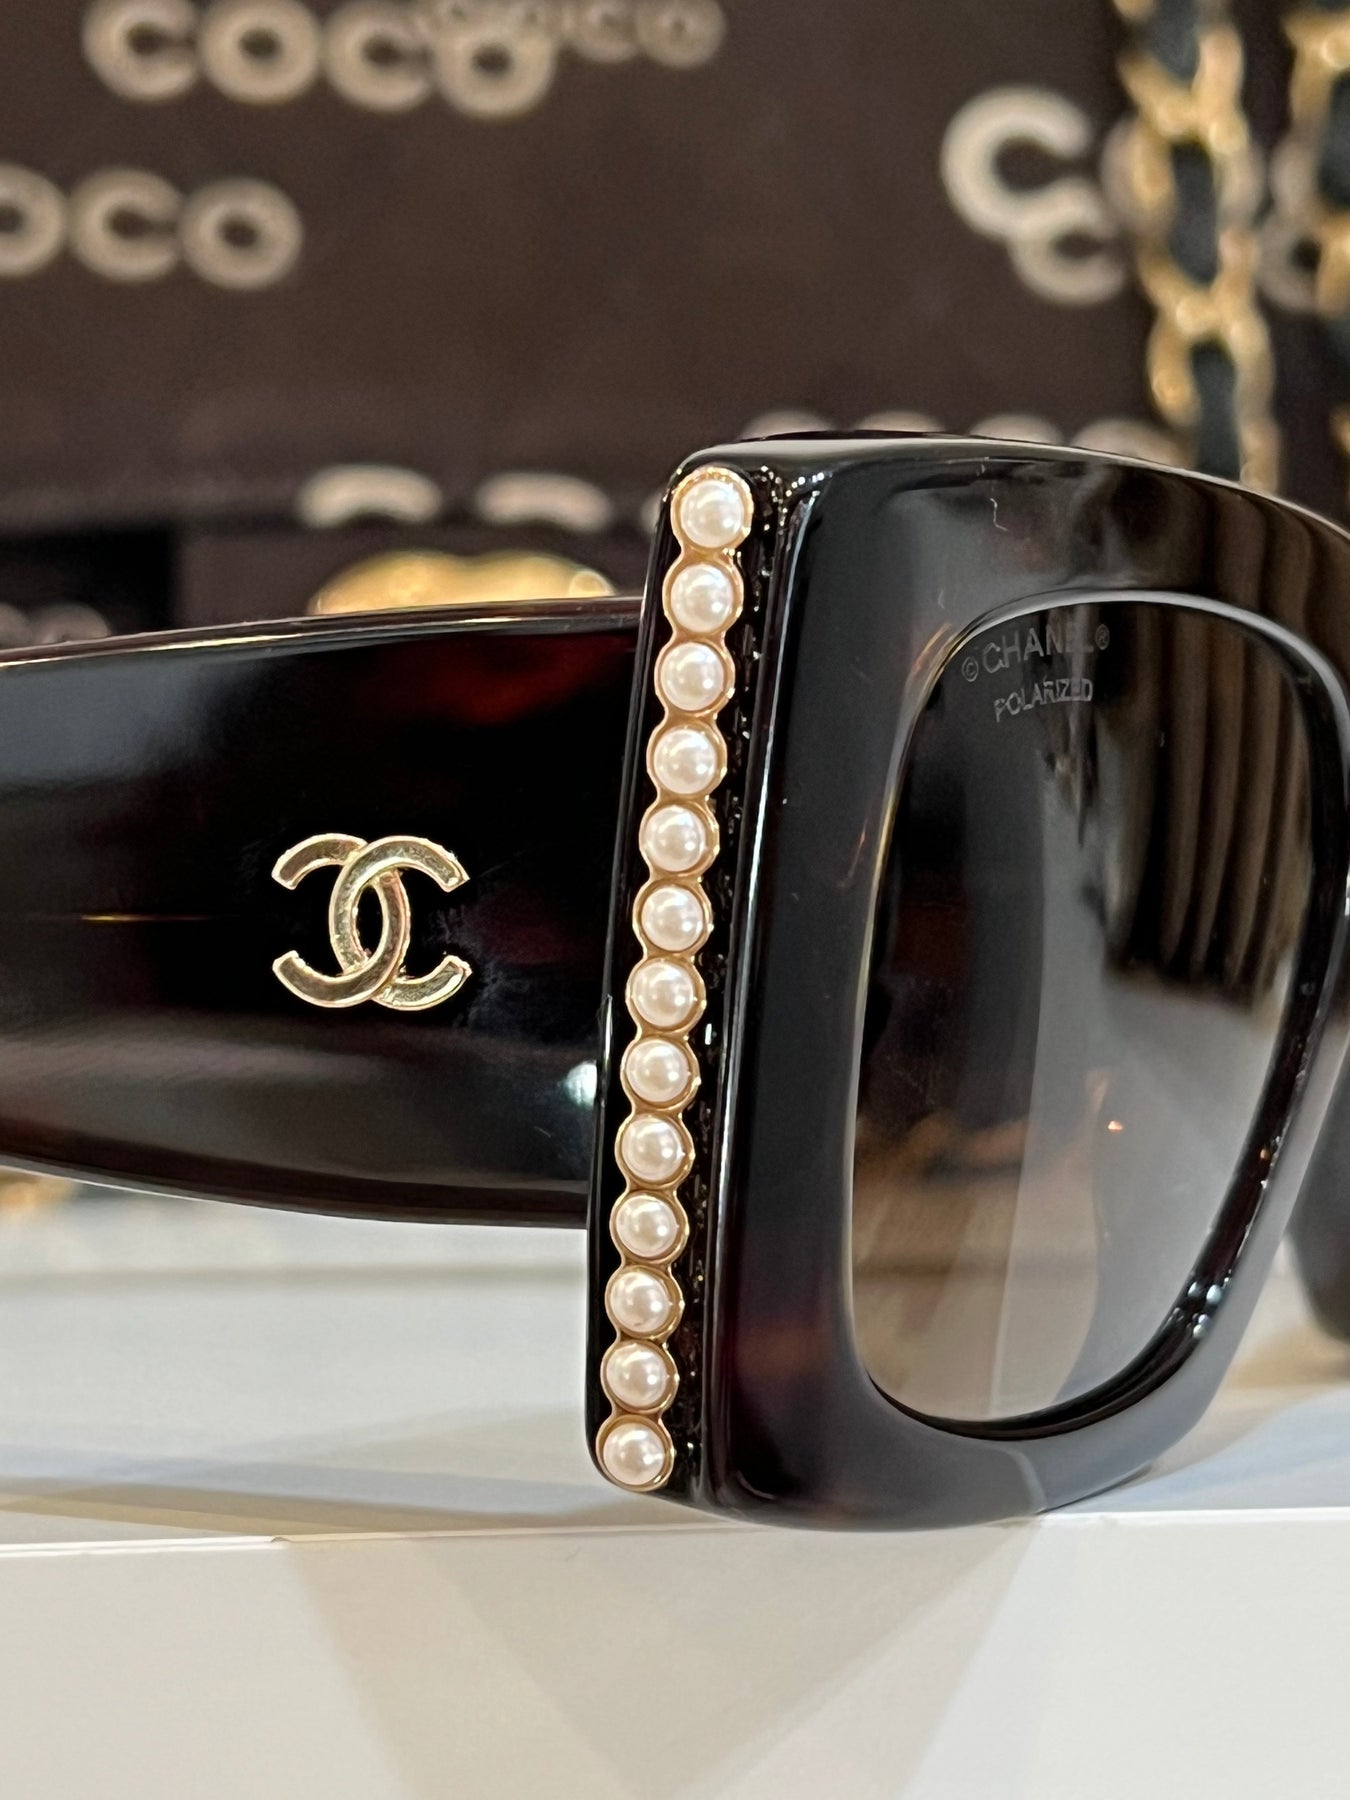 Sunglasses: Square Sunglasses, acetate & glass pearls — Fashion